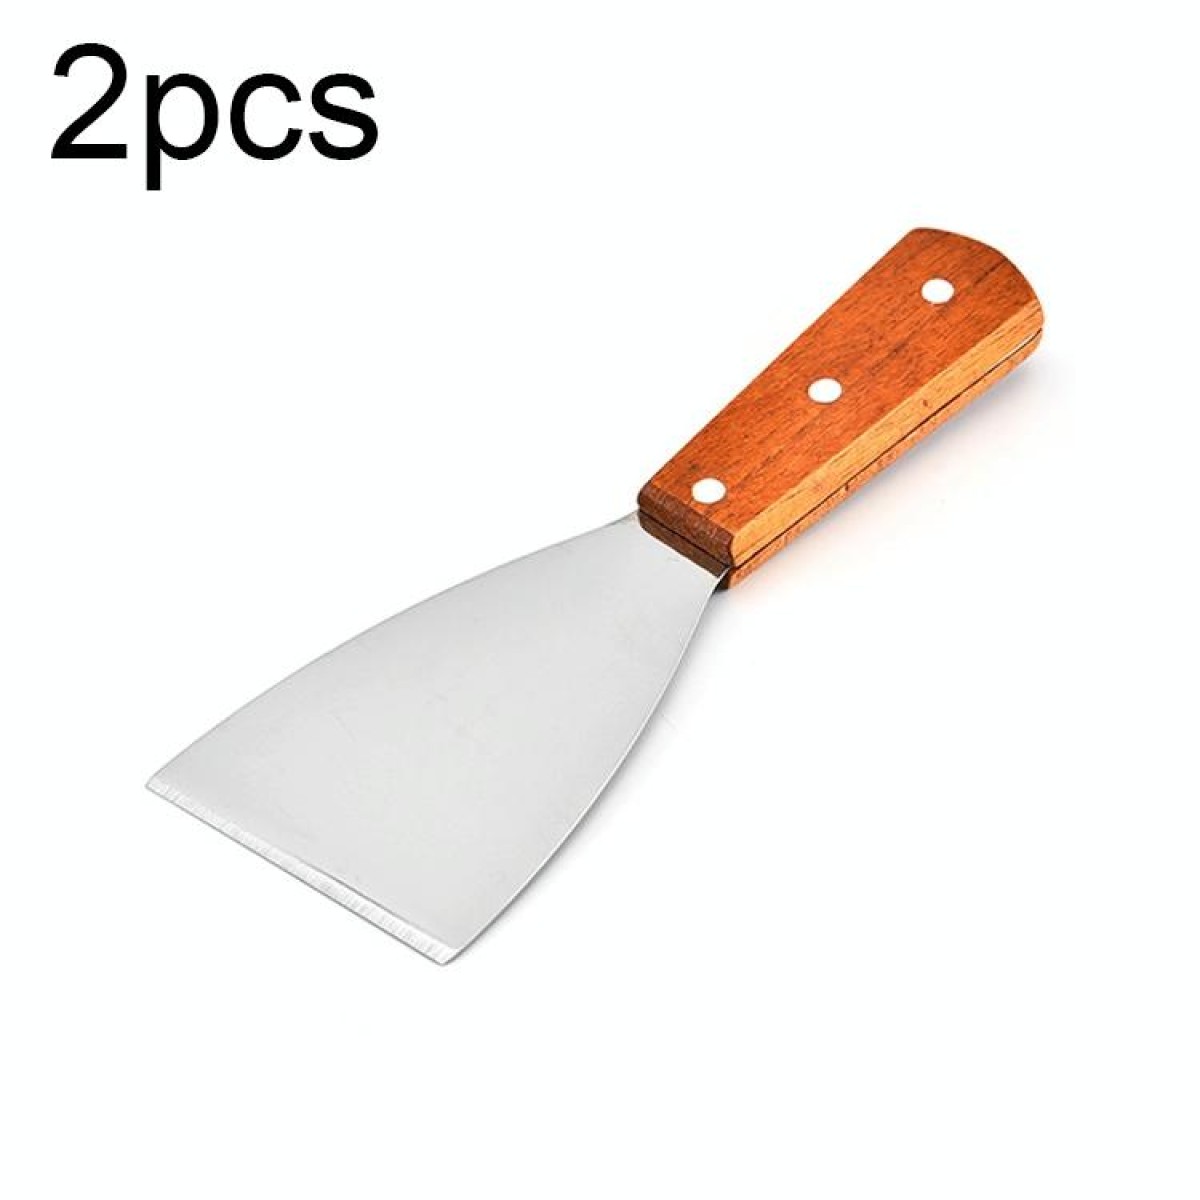 2pcs Stainless Steel Pizza and Steak Shovel Wooden Handle Slanted Shovel Kitchen Tool, Size: S